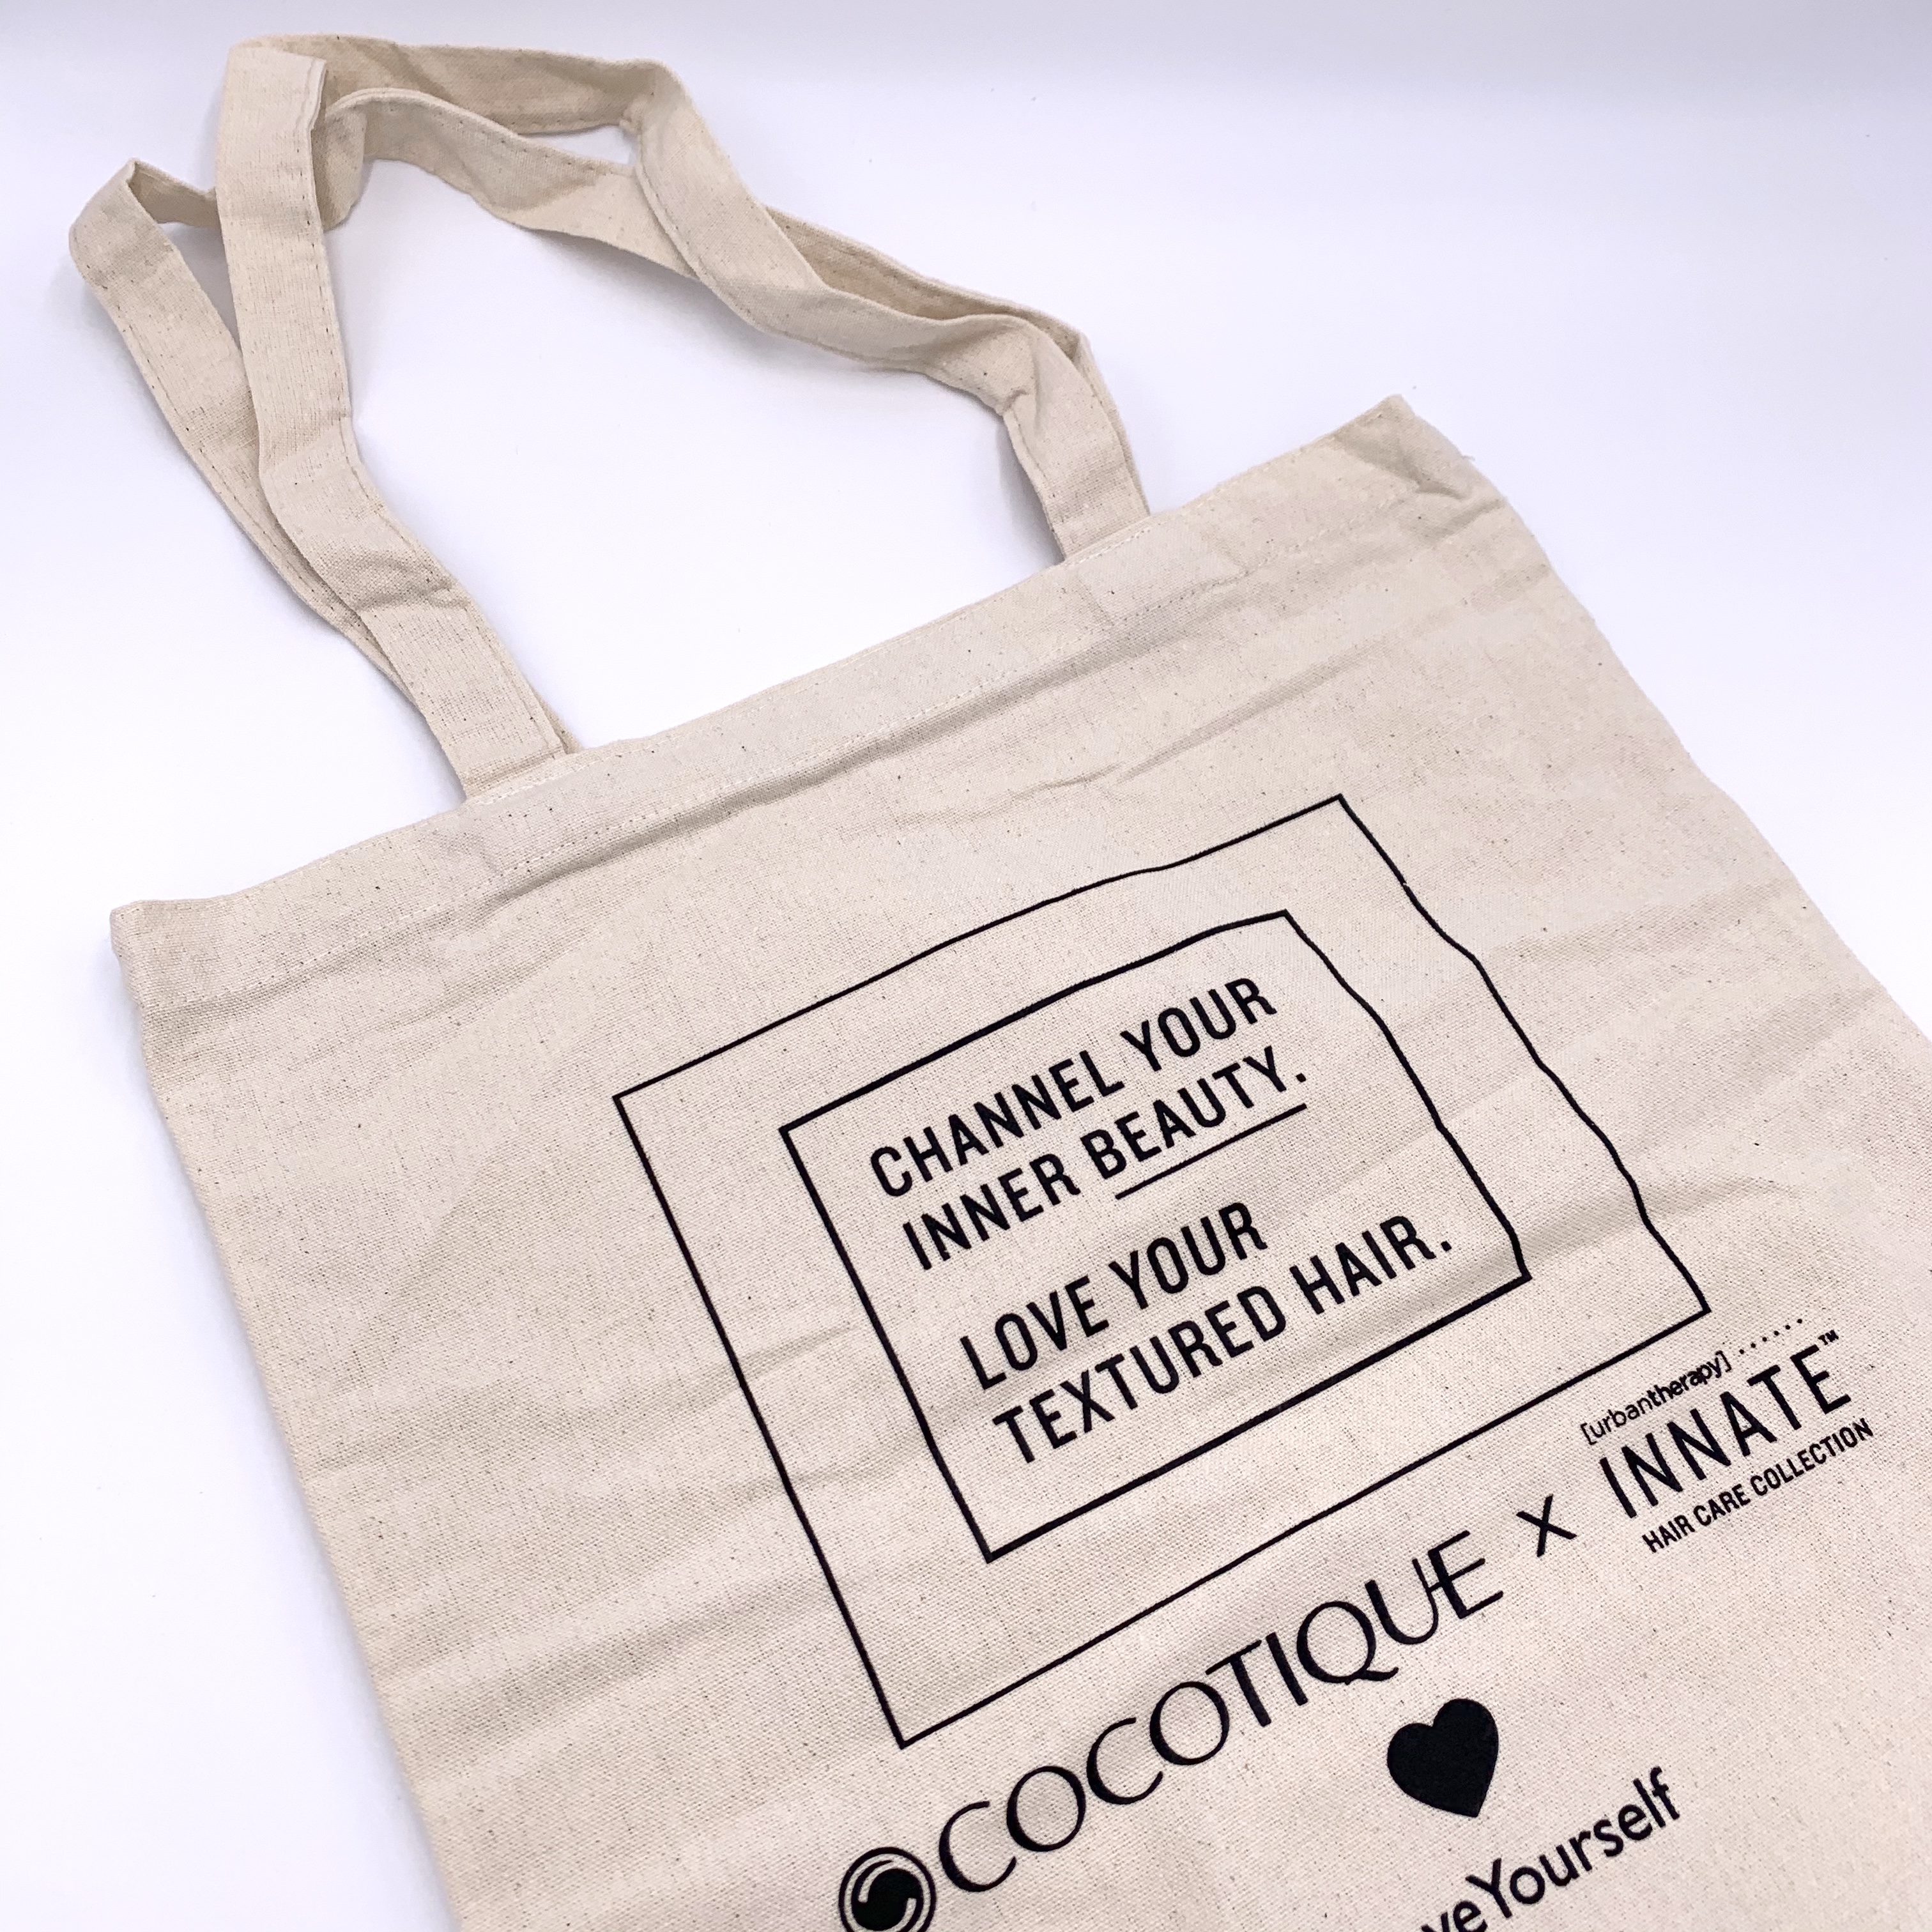 Bag2 for Cocotique June 2020